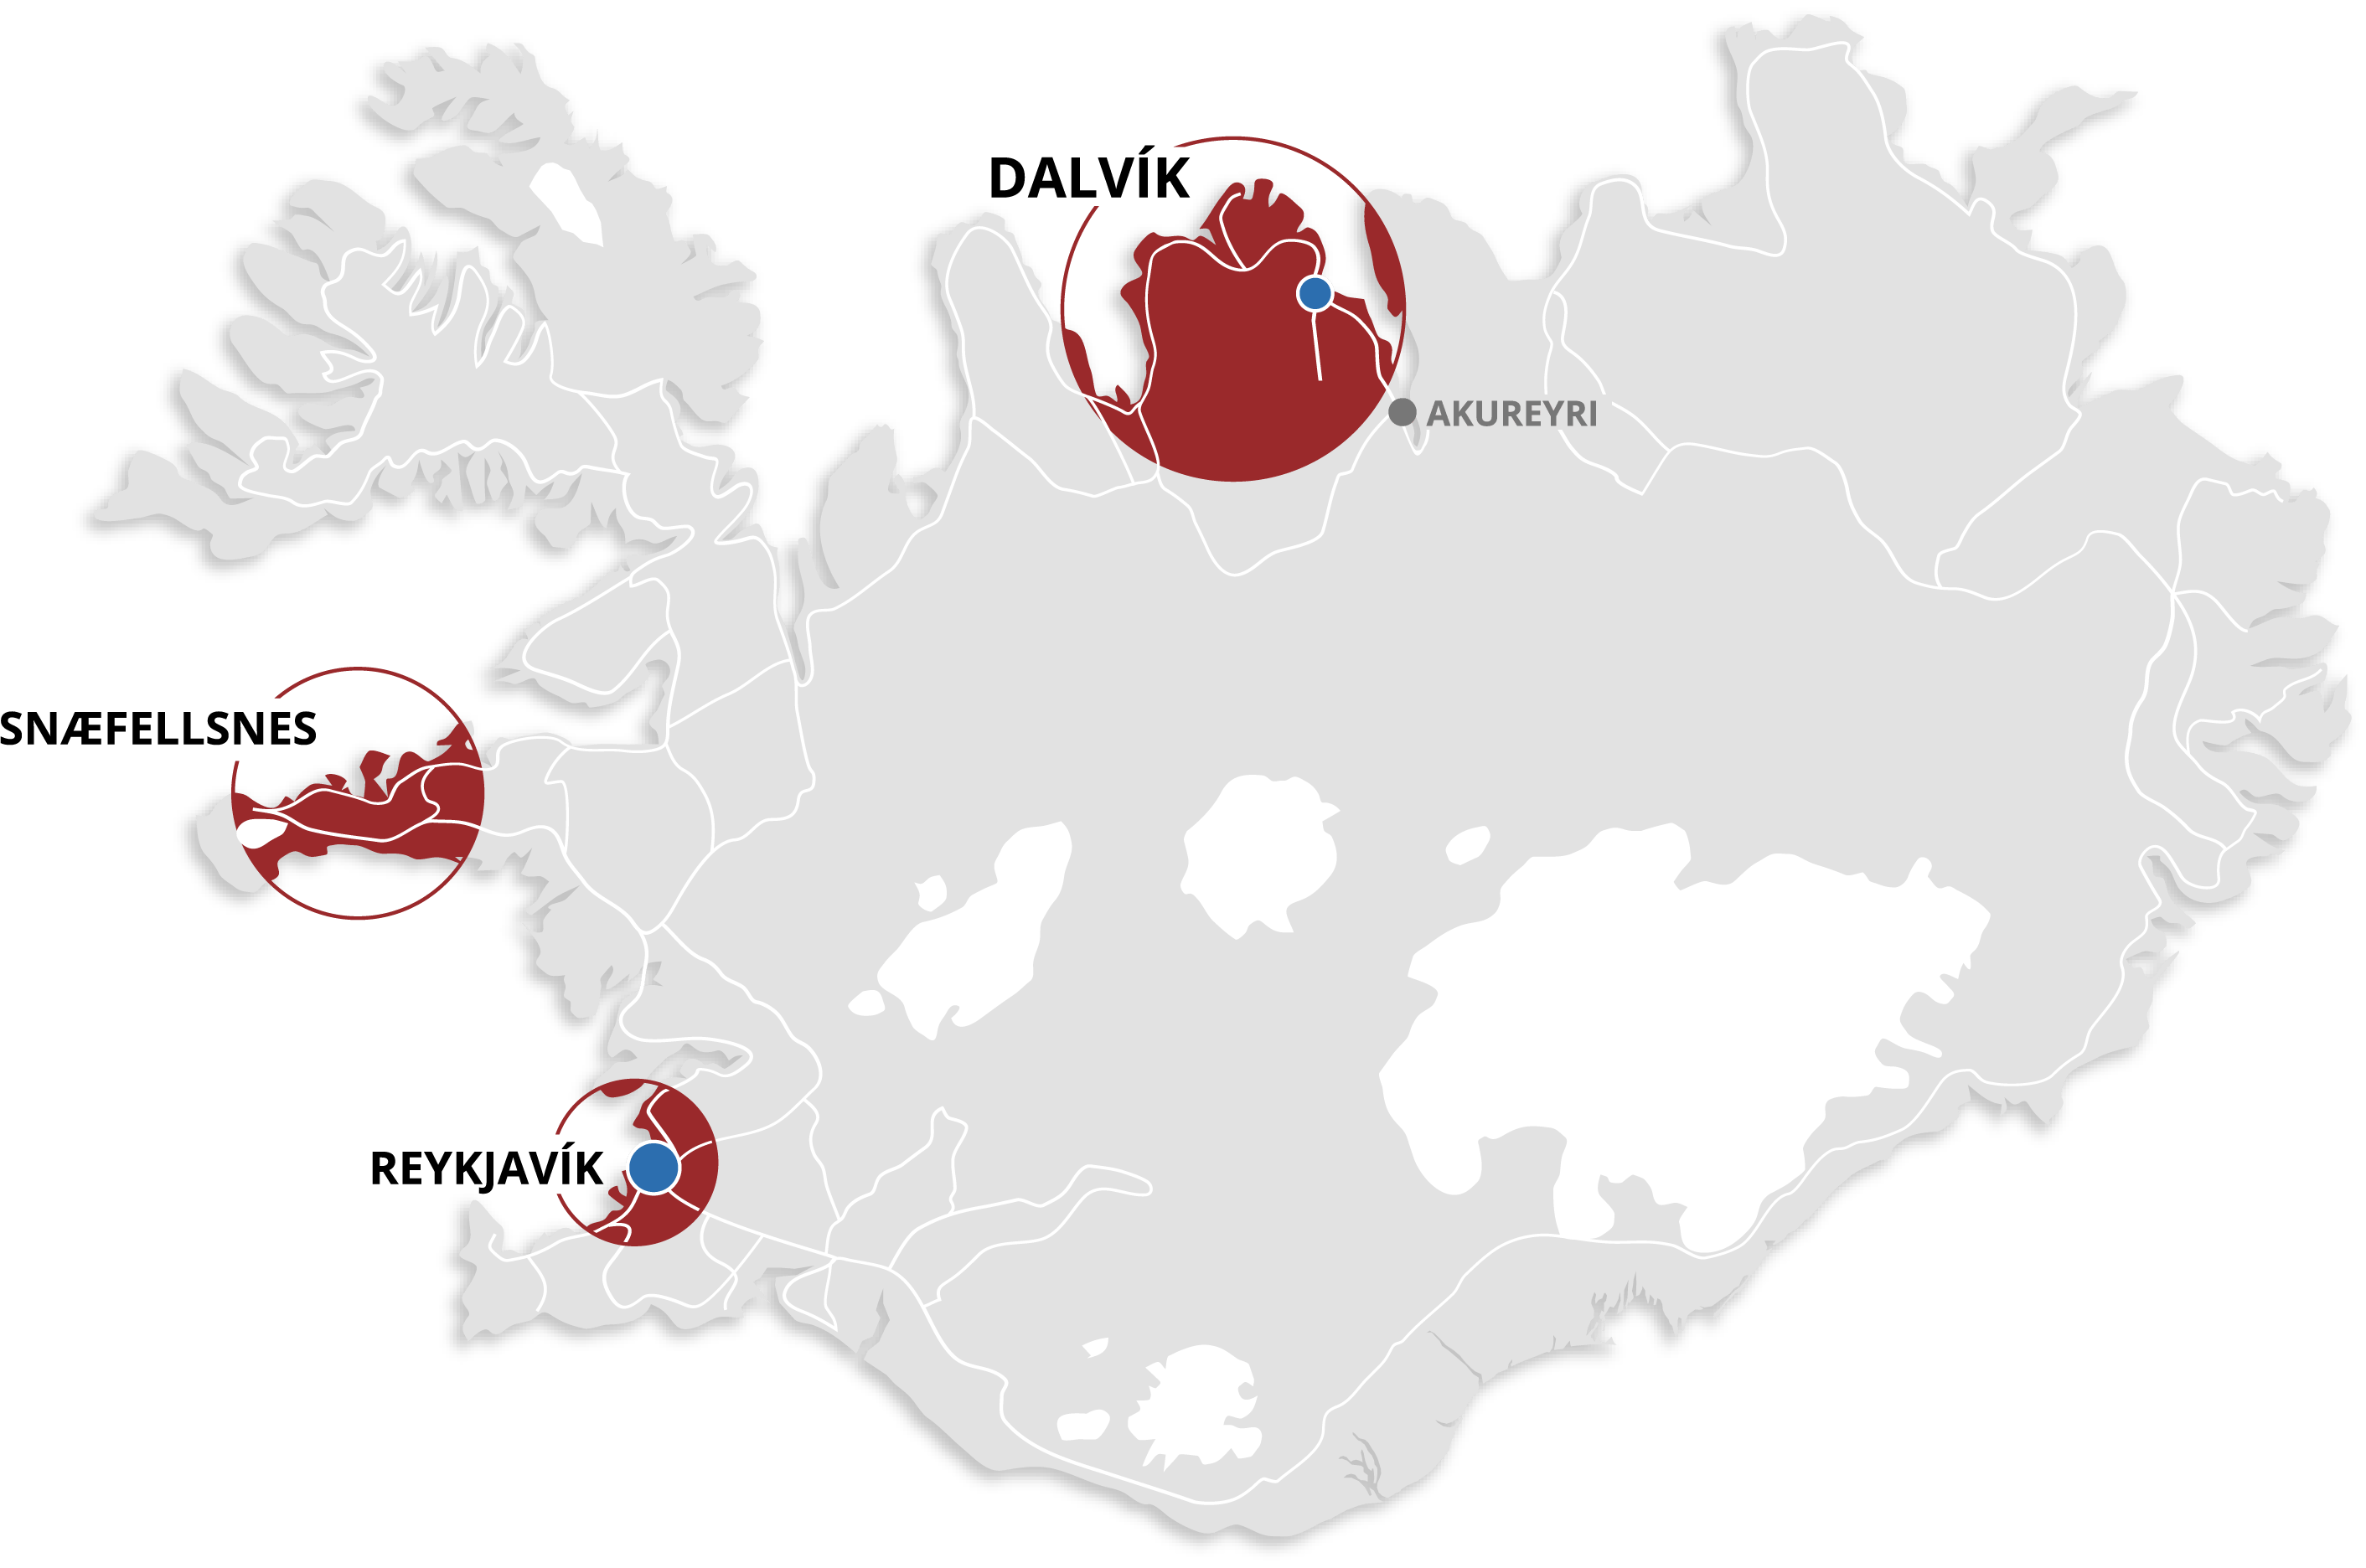 Dalvík - Snæfellsnes - Reykjavík